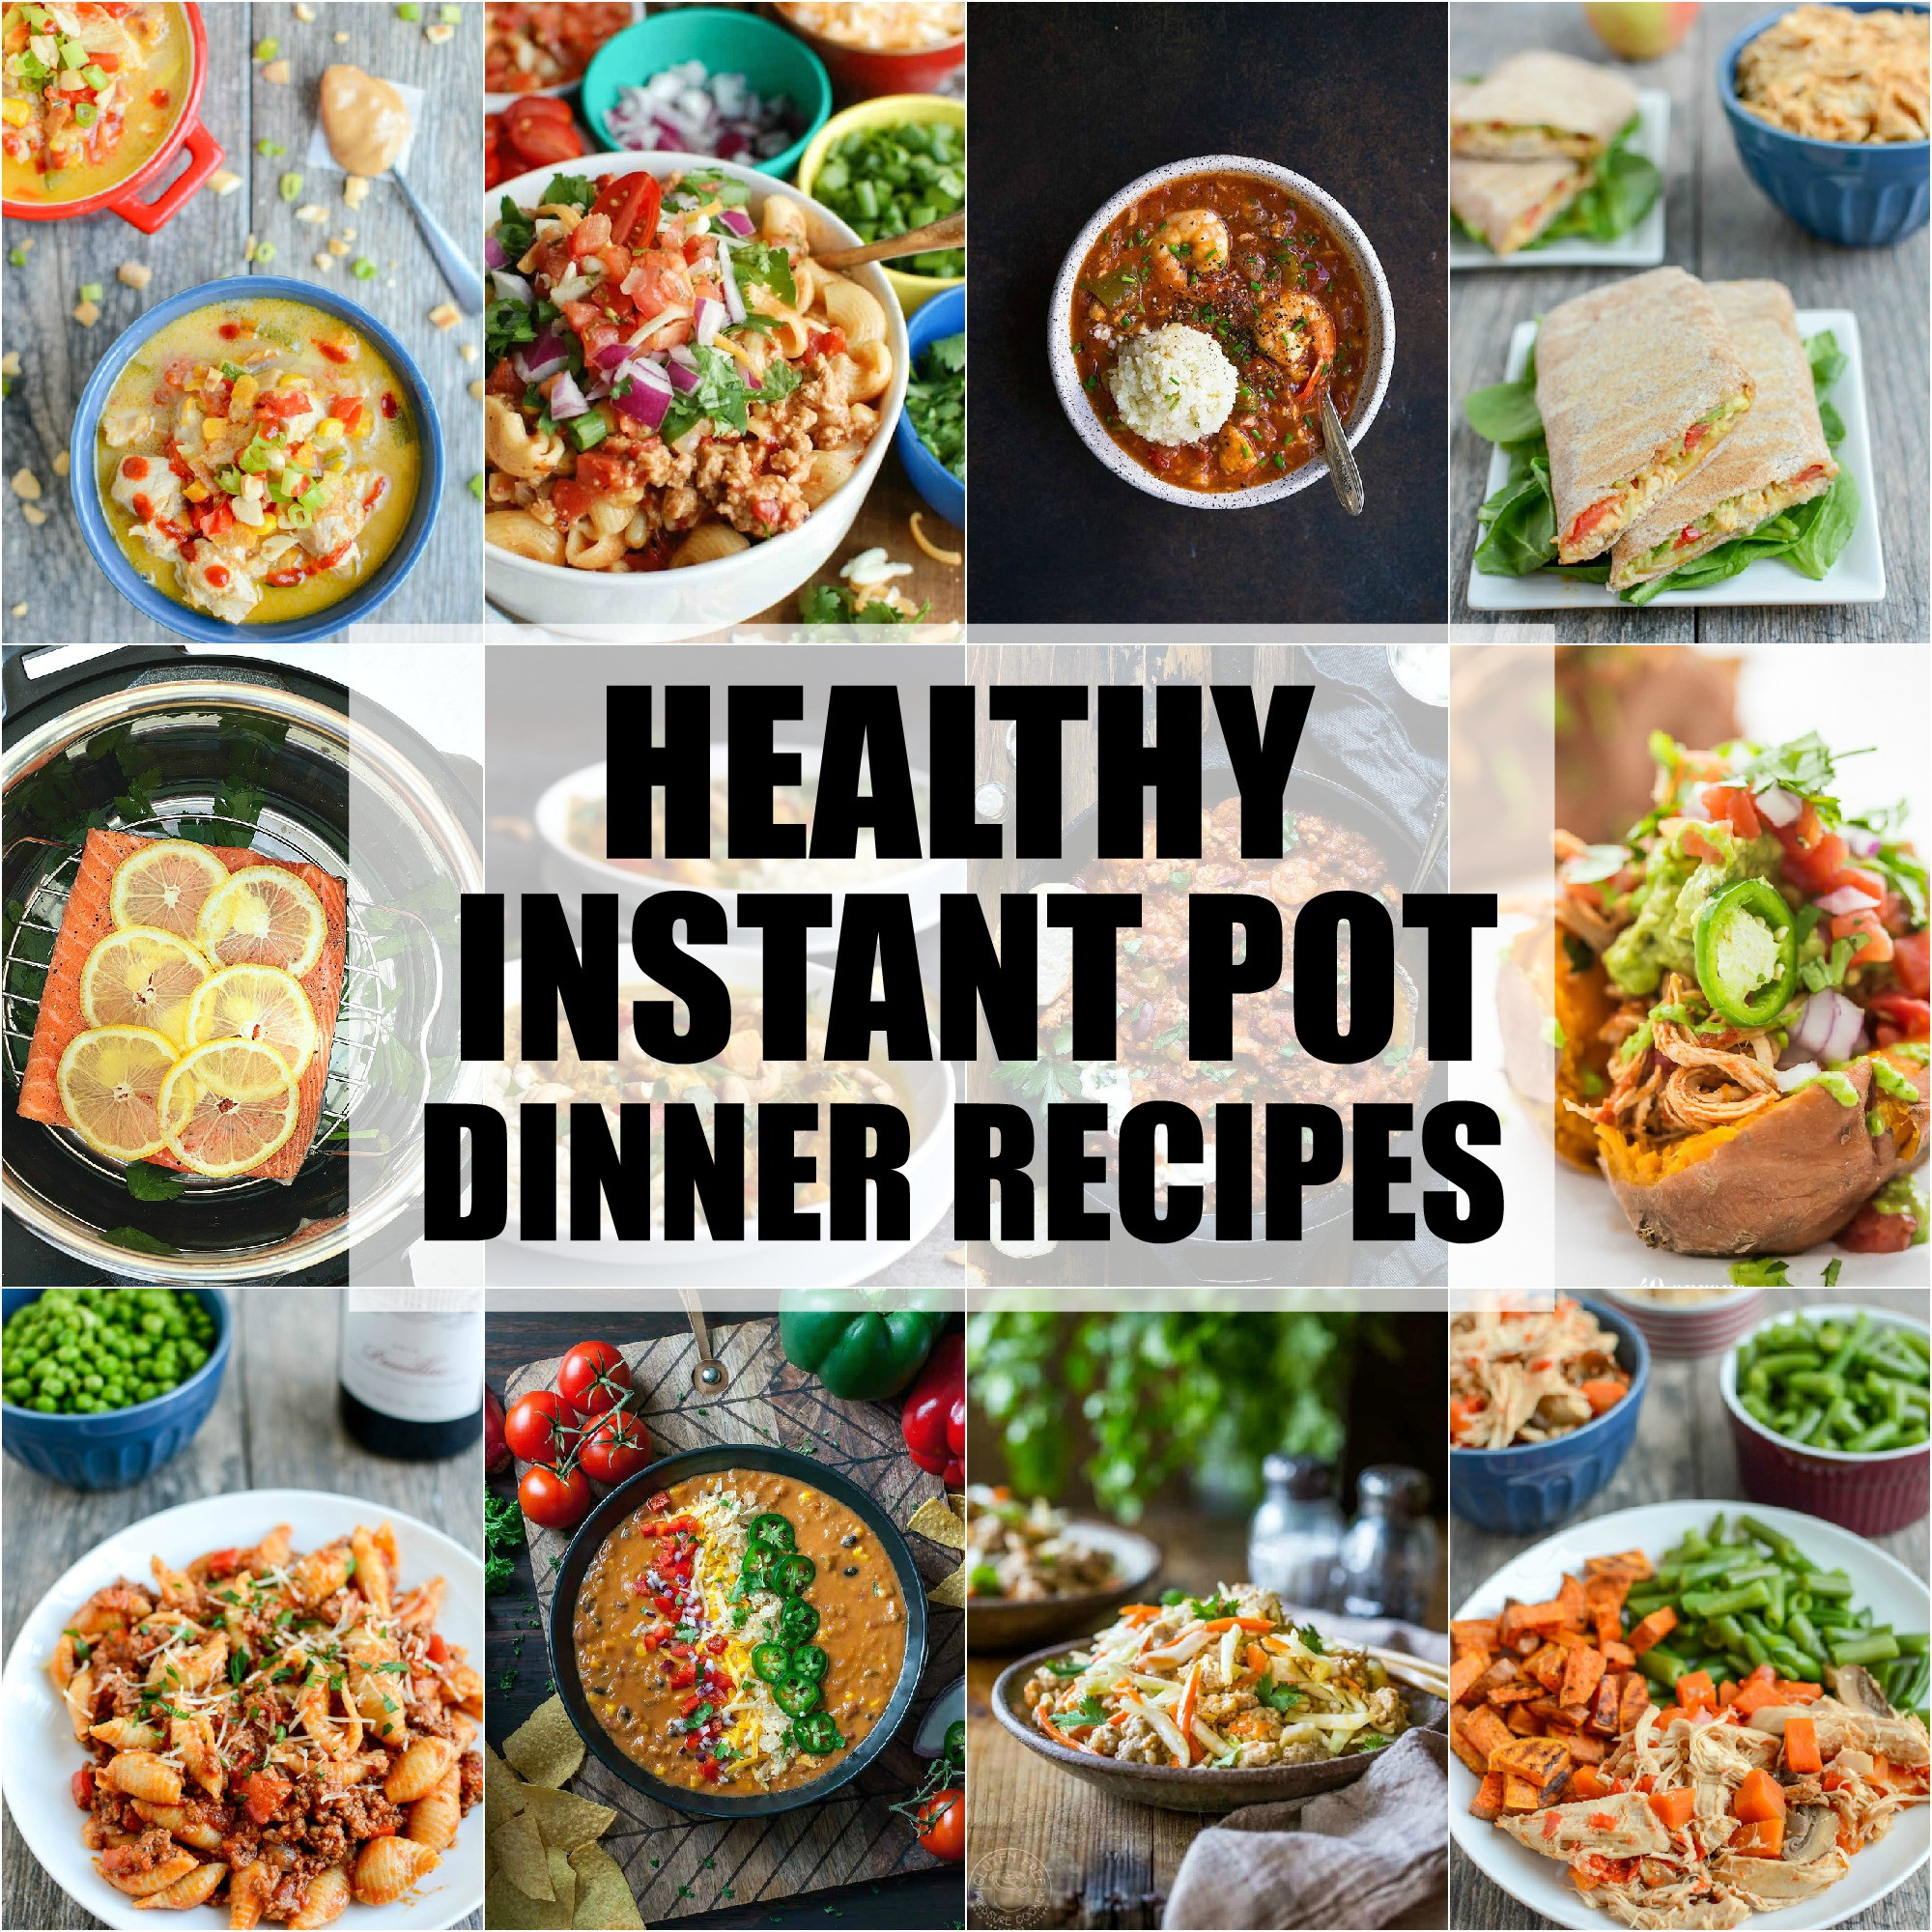 Instant Pot Desserts Healthy
 Healthy Instant Pot Dinner Recipes